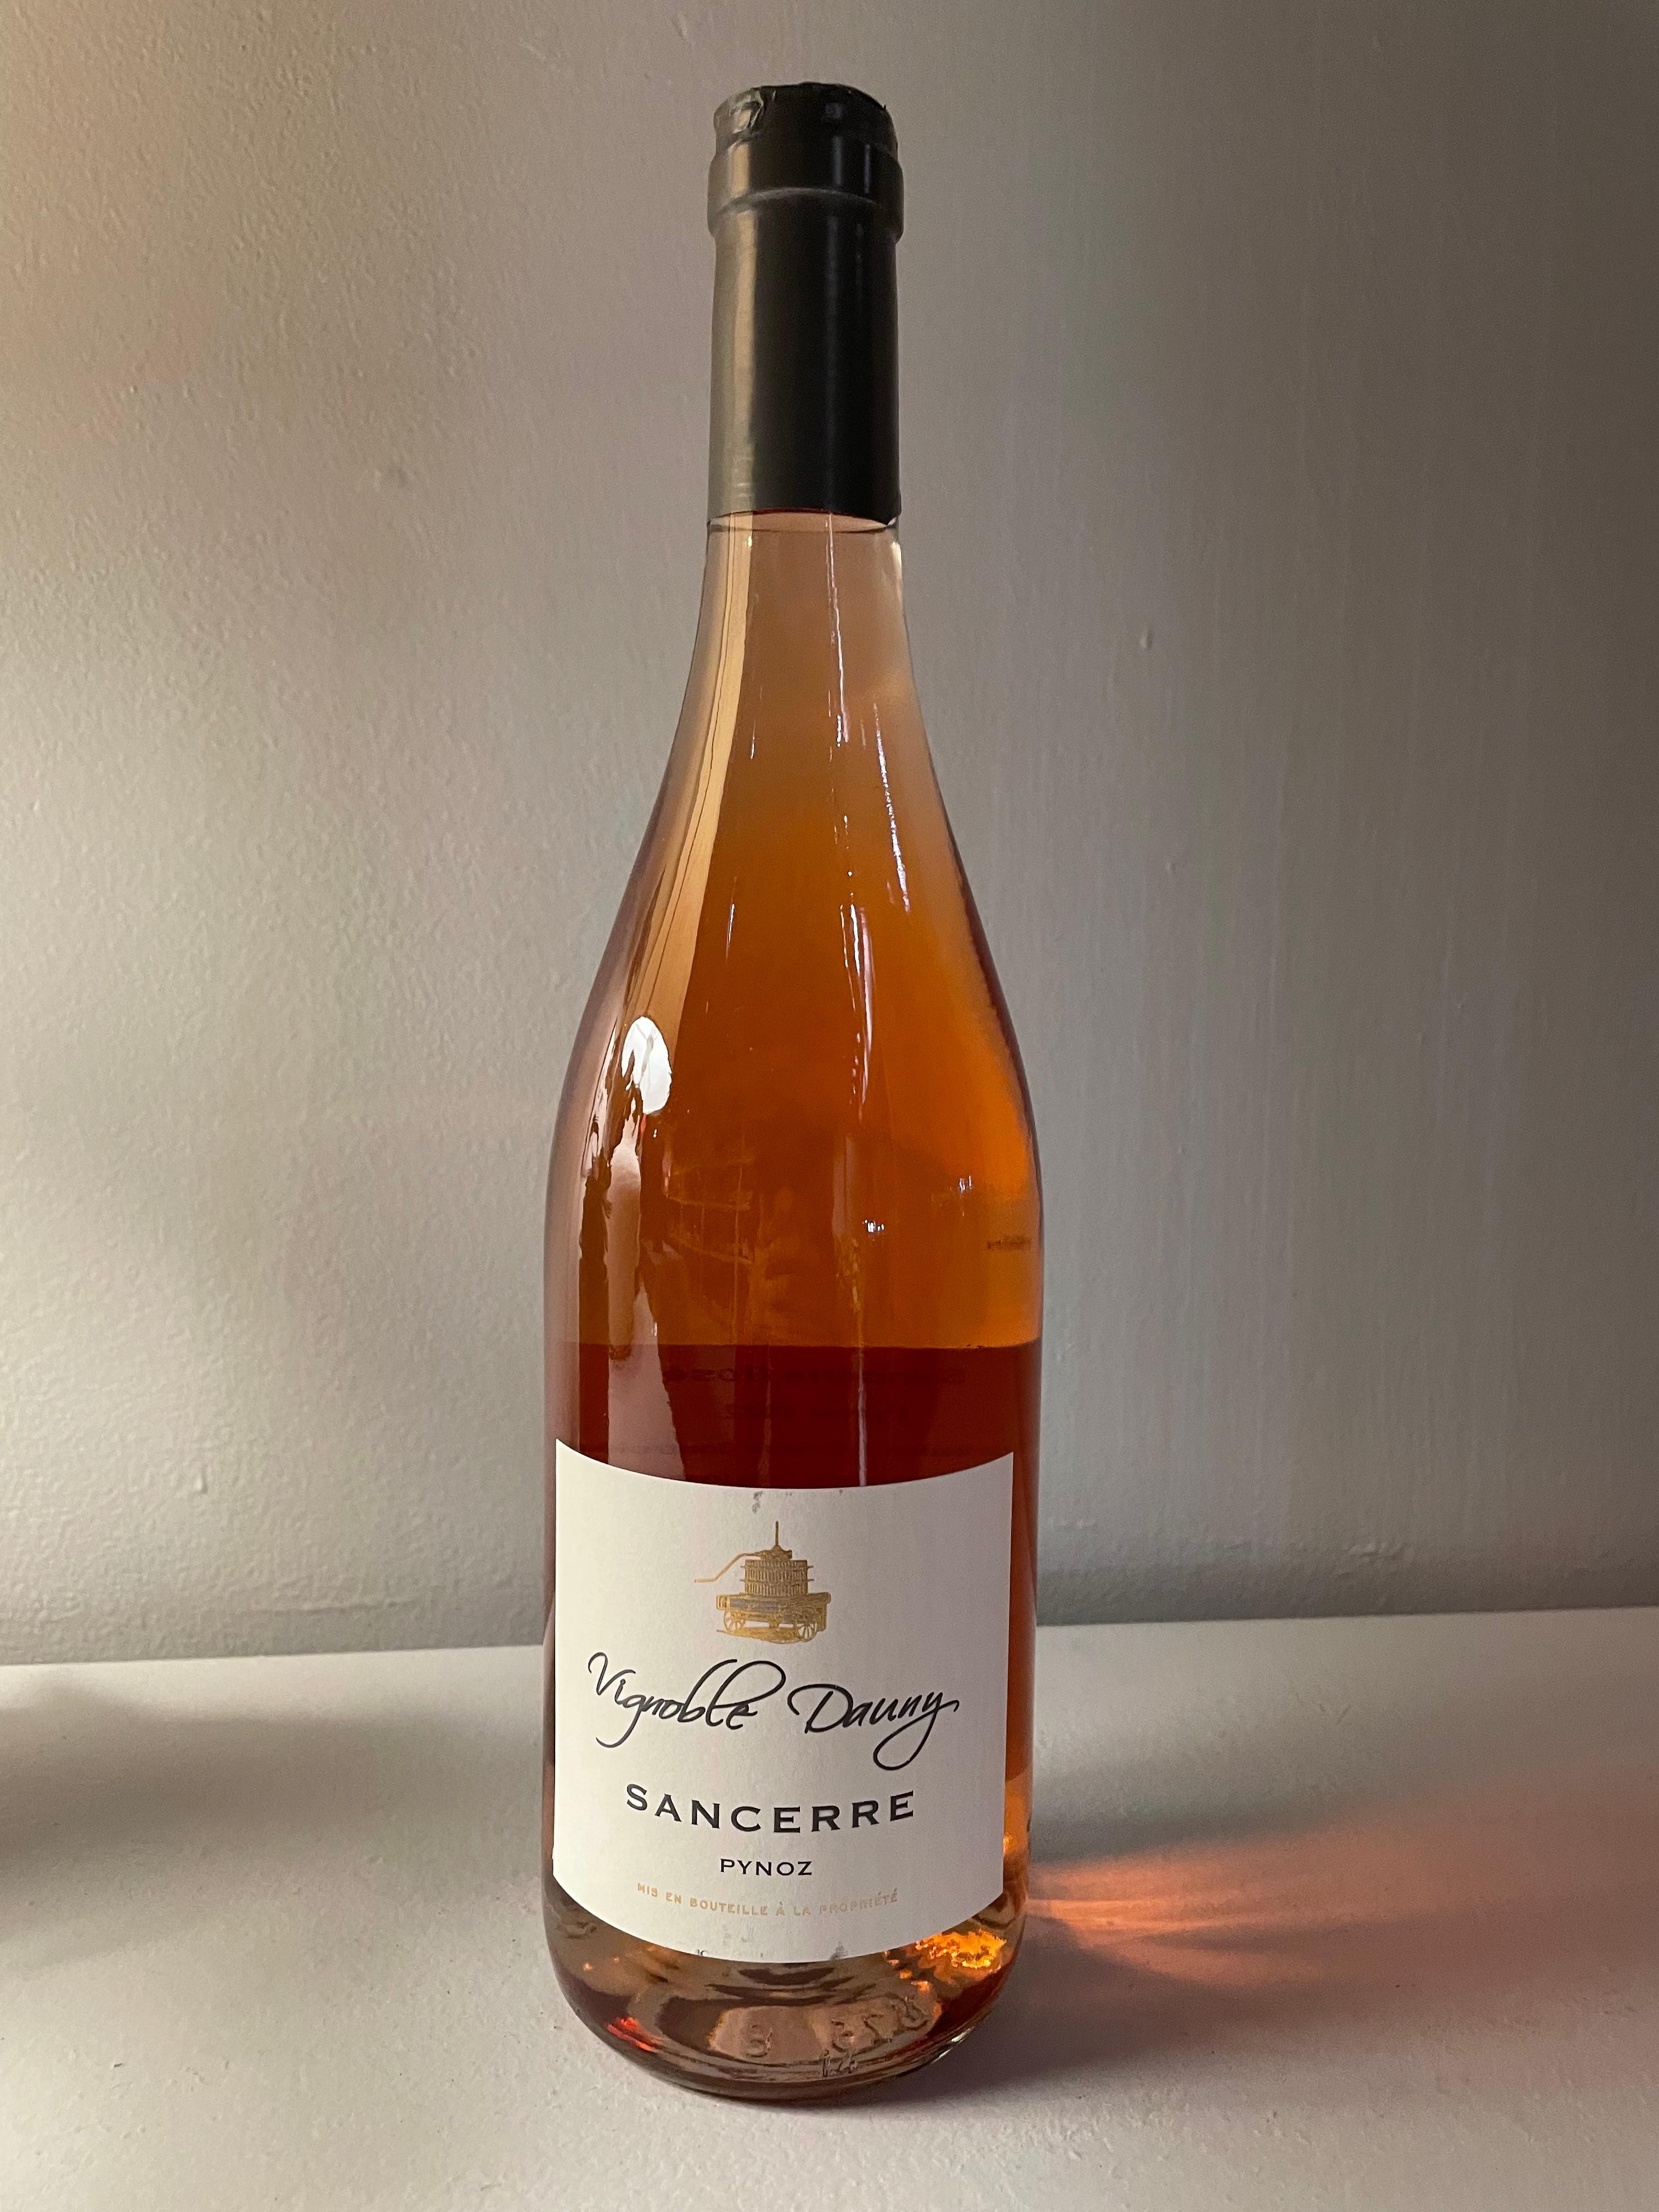 2022 Pinot Noir Rosé, Dauny, Sancerre